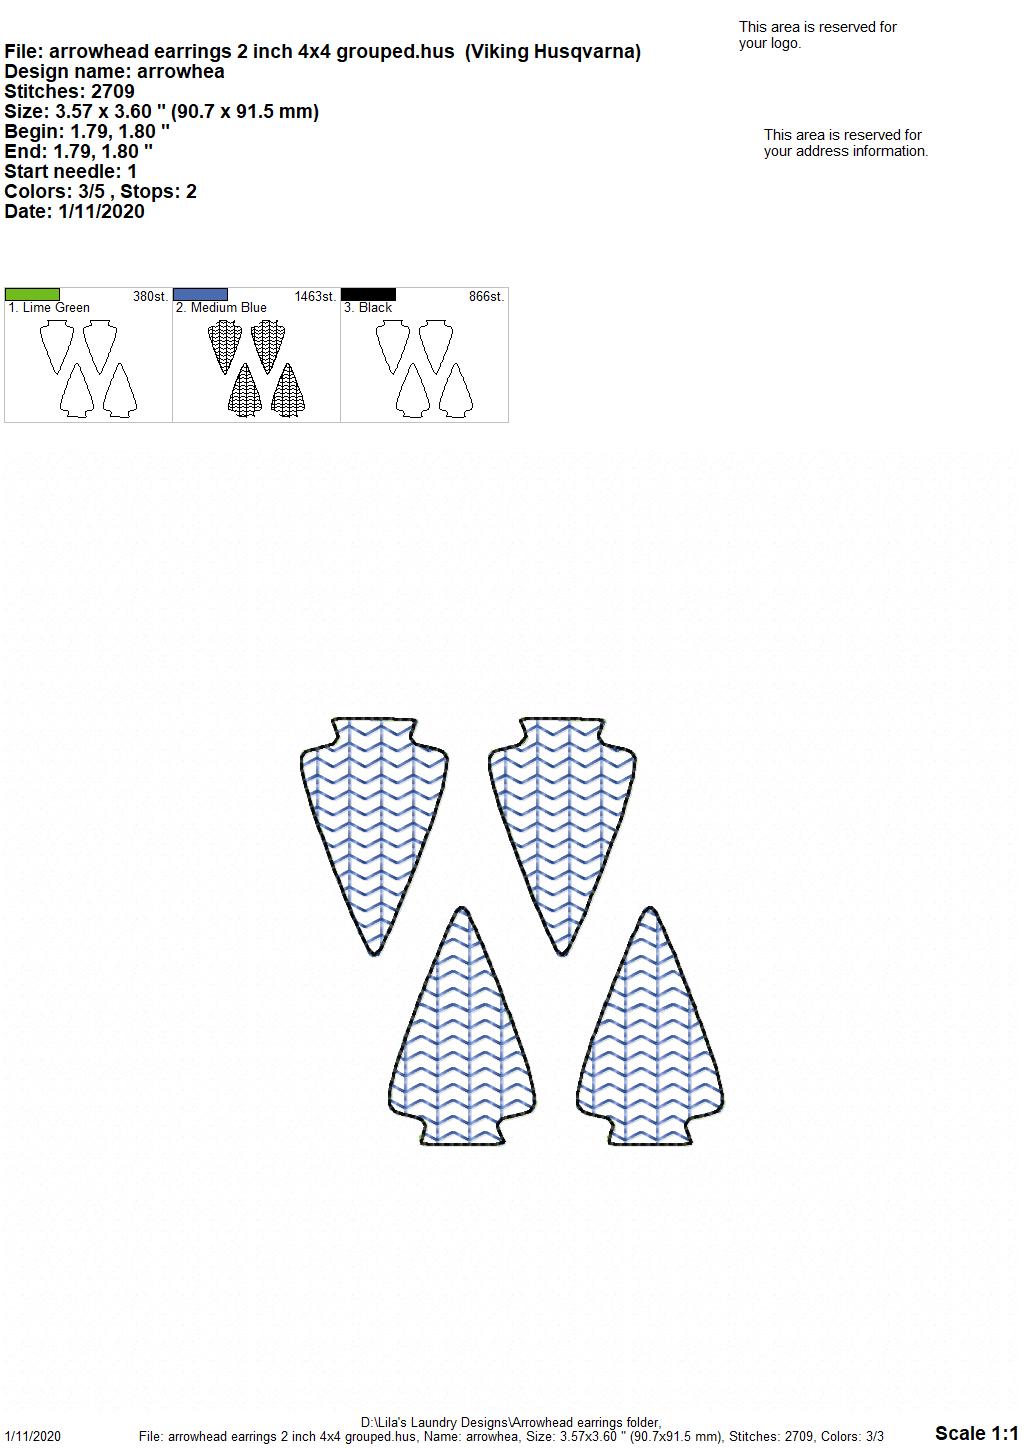 Arrowhead Earrings - 3 sizes - Digital Embroidery Design